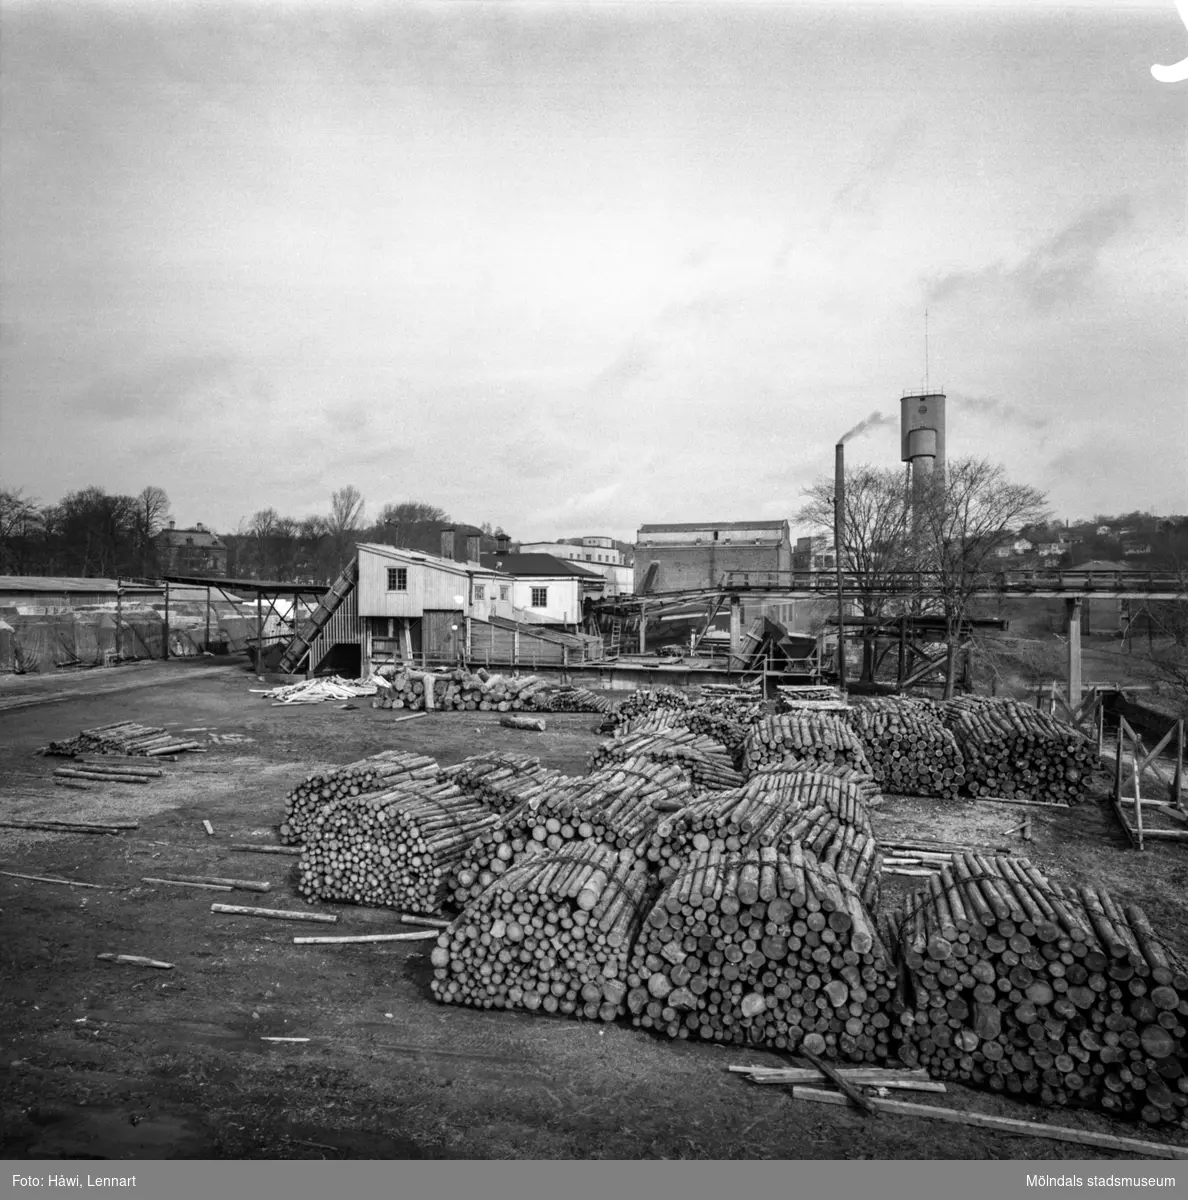 Gamla renseriet på pappersbruket Papyrus i Mölndal, 23/3 1961.